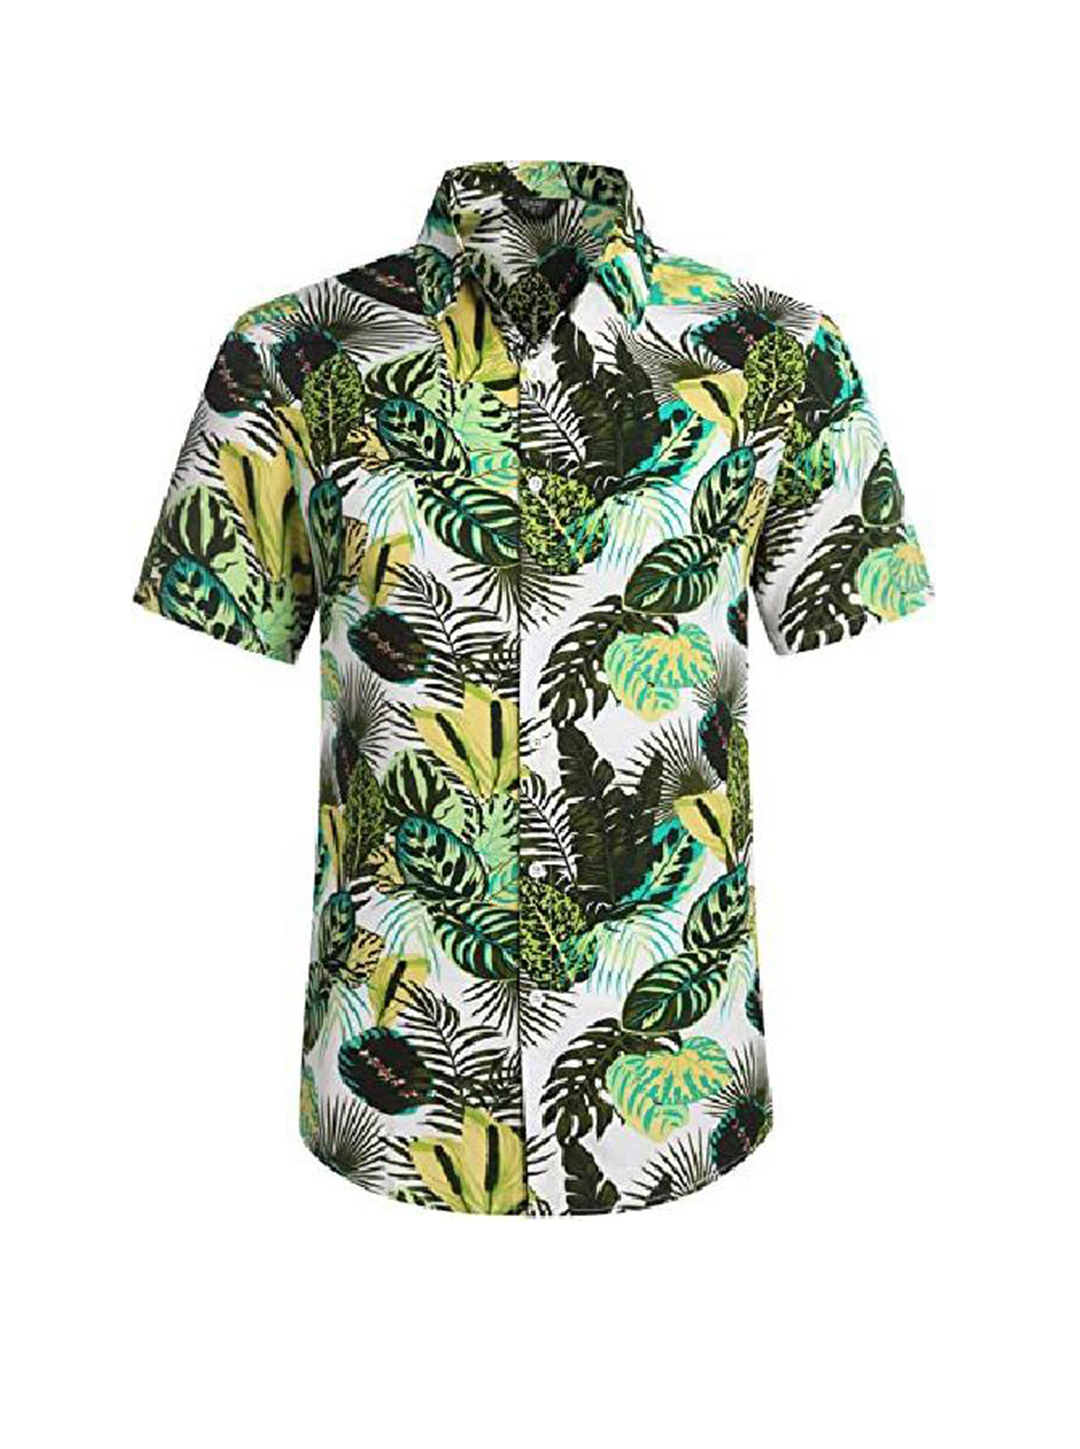 Stidham Hawaiian Style Floral Print Casual Shirt